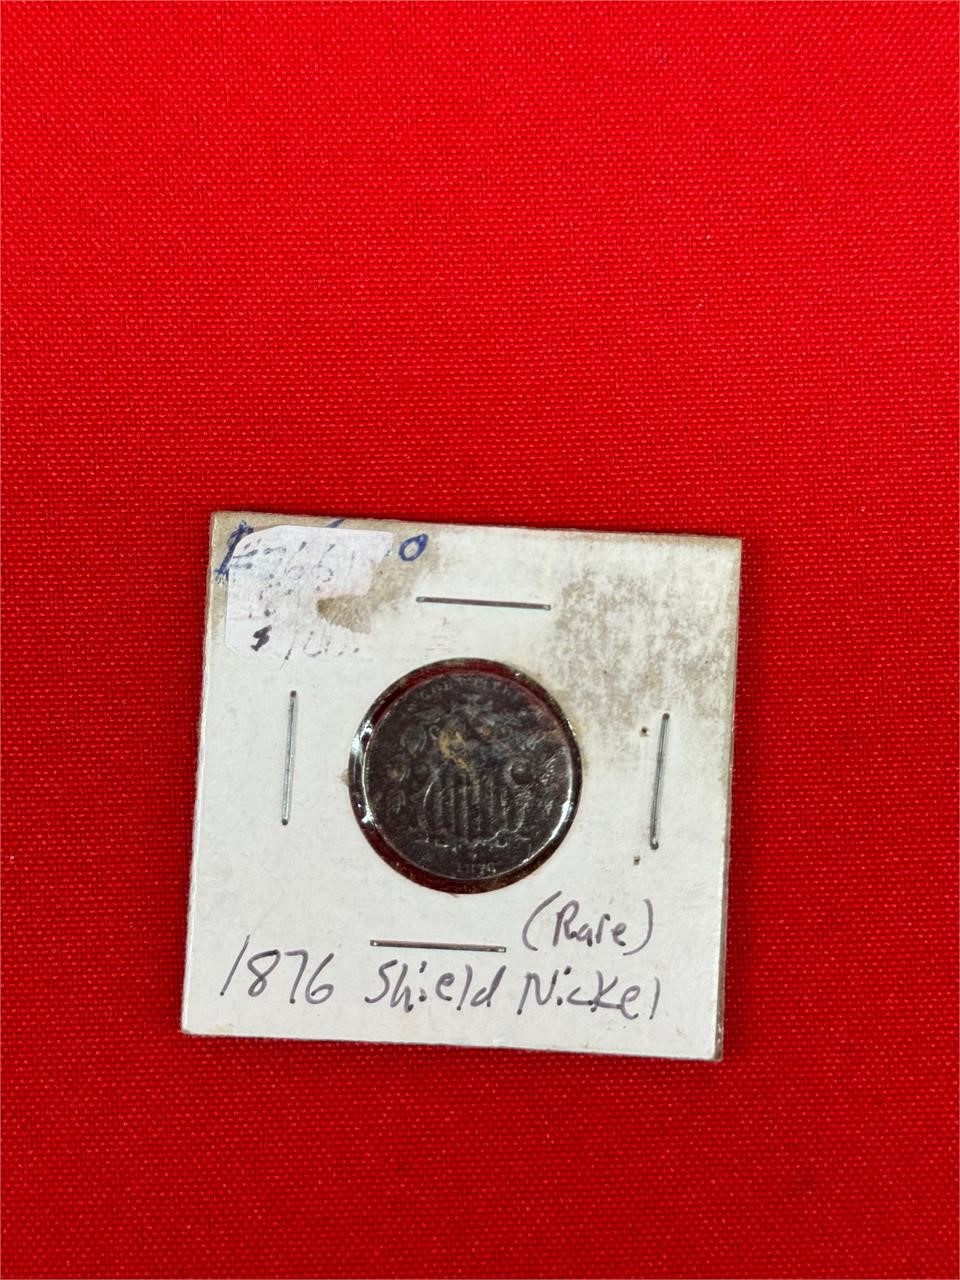 Rare 1876 Shield Nickel